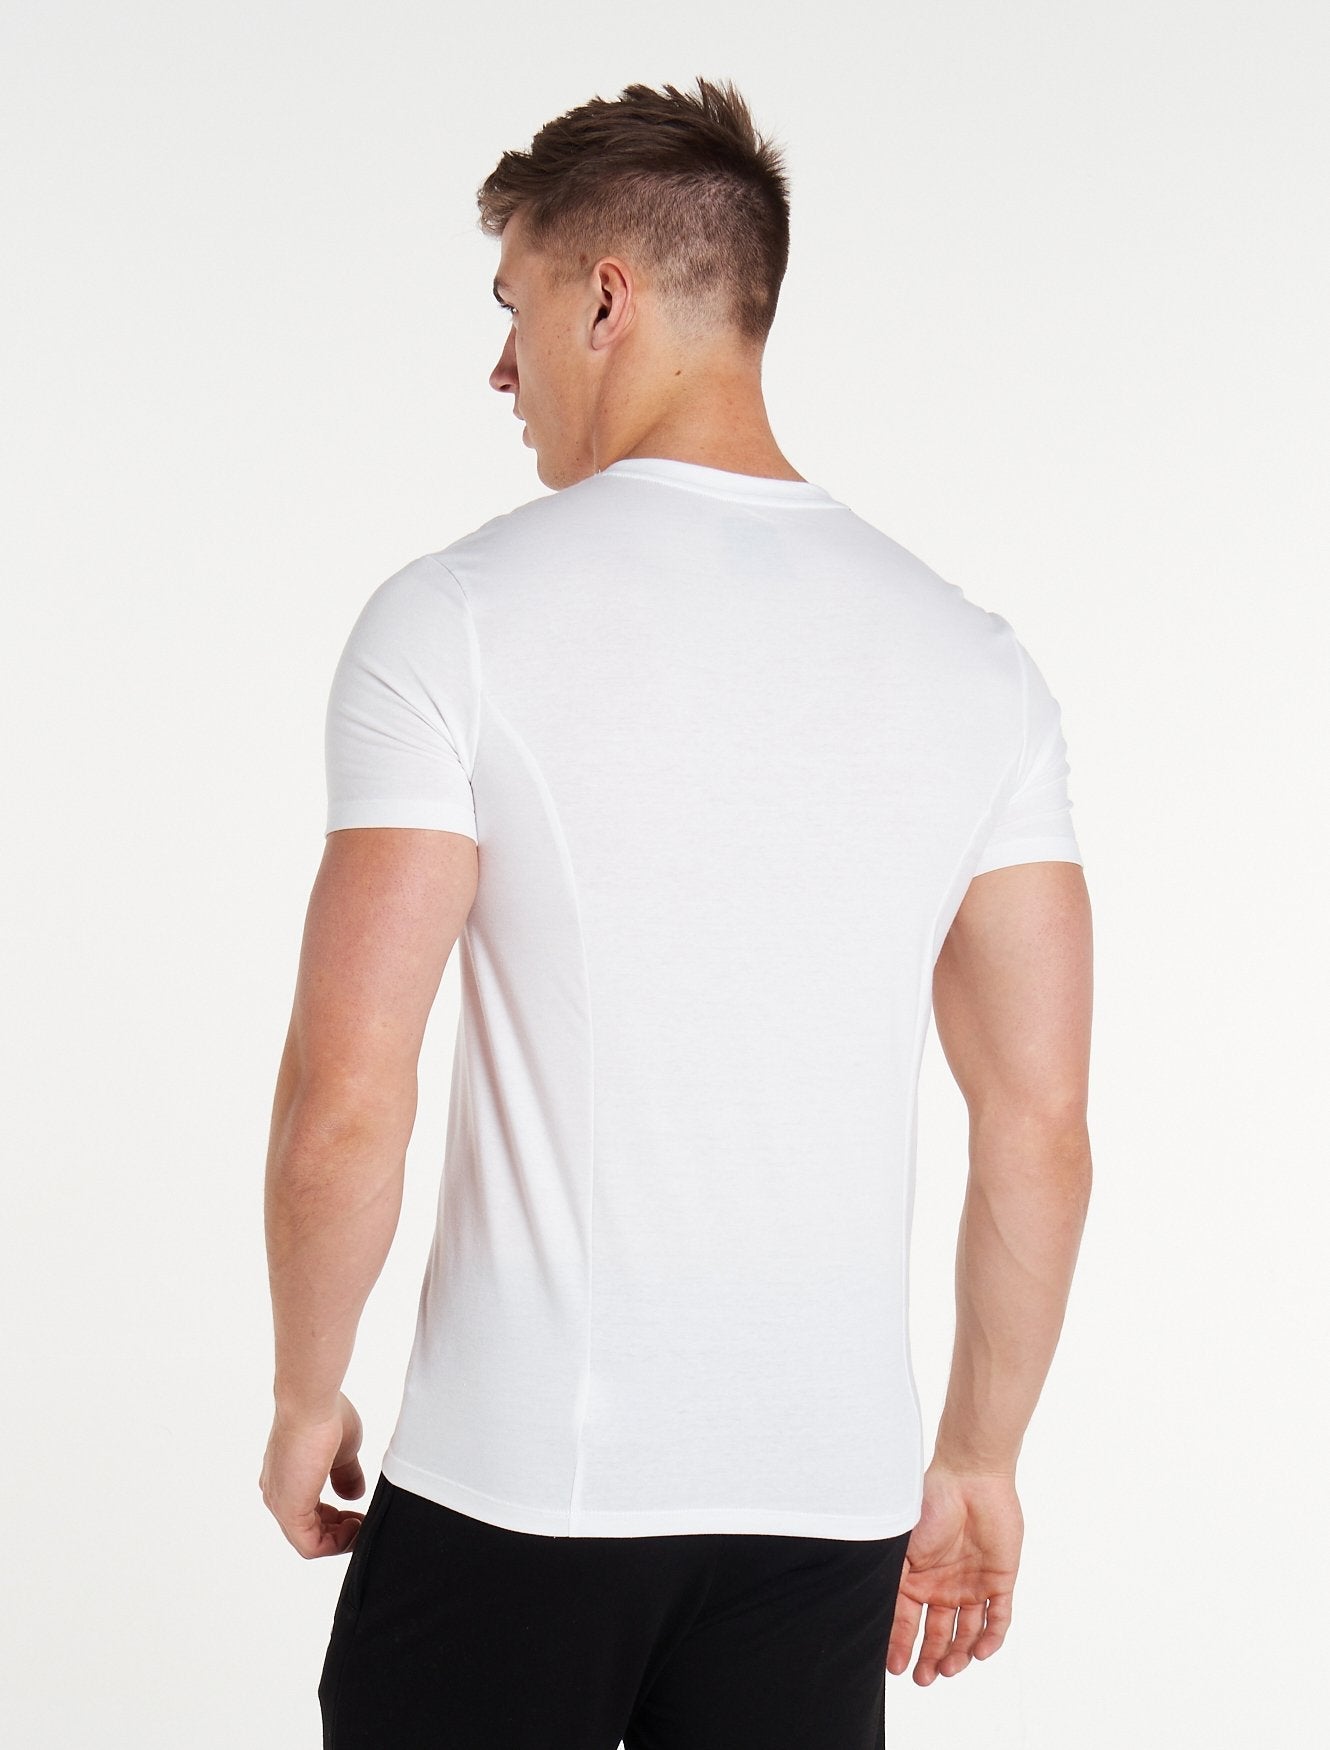 Essential T-Shirt / White Pursue Fitness 2